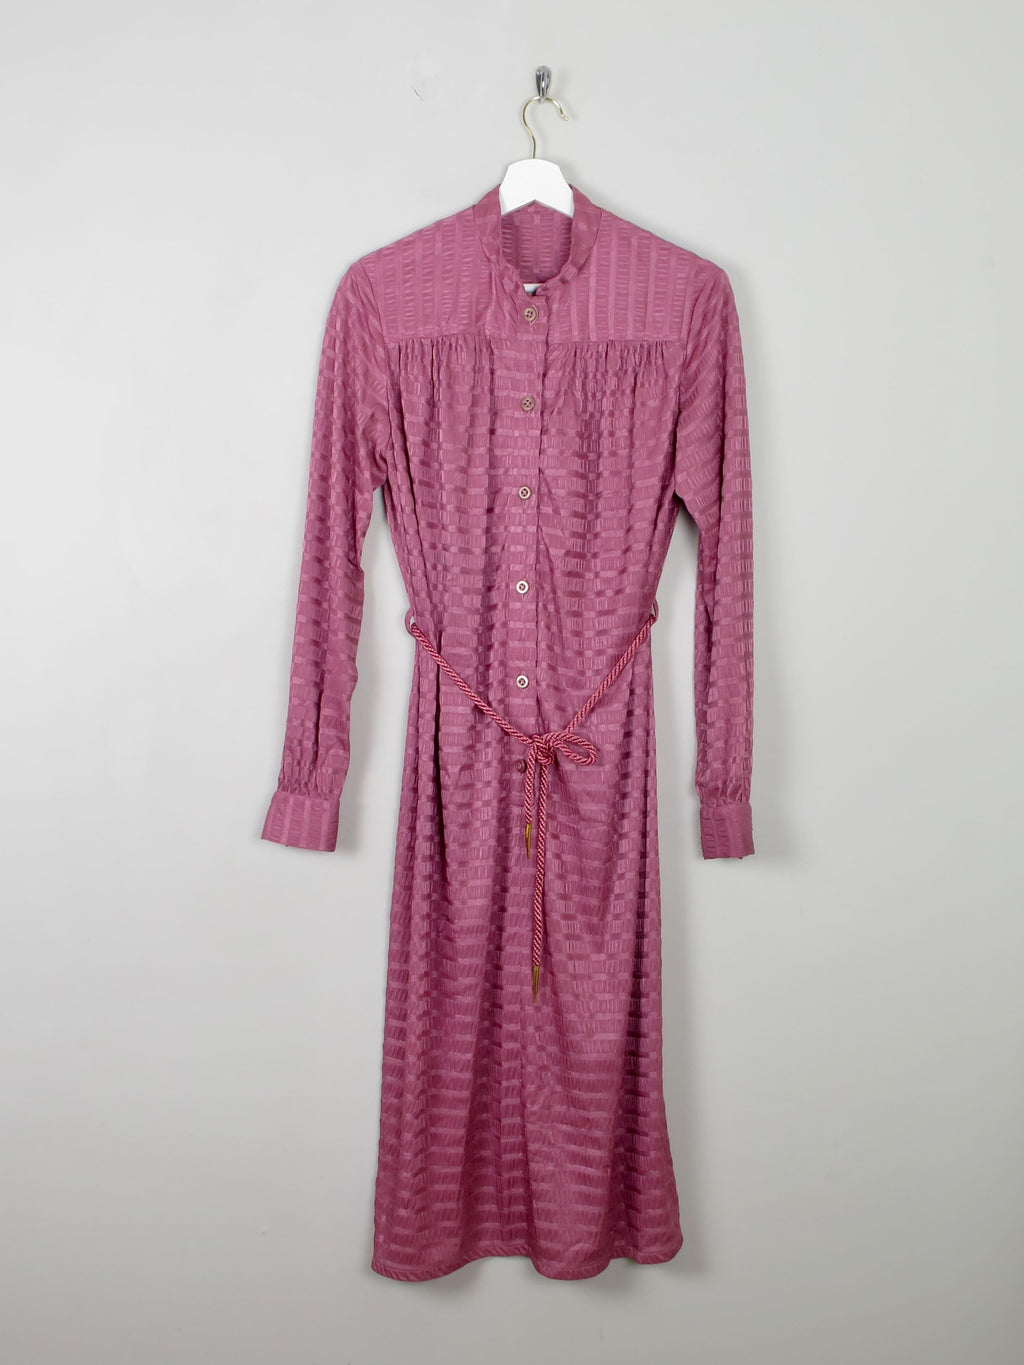 Pink 1970s Vintage Dress Shirt Style M - The Harlequin